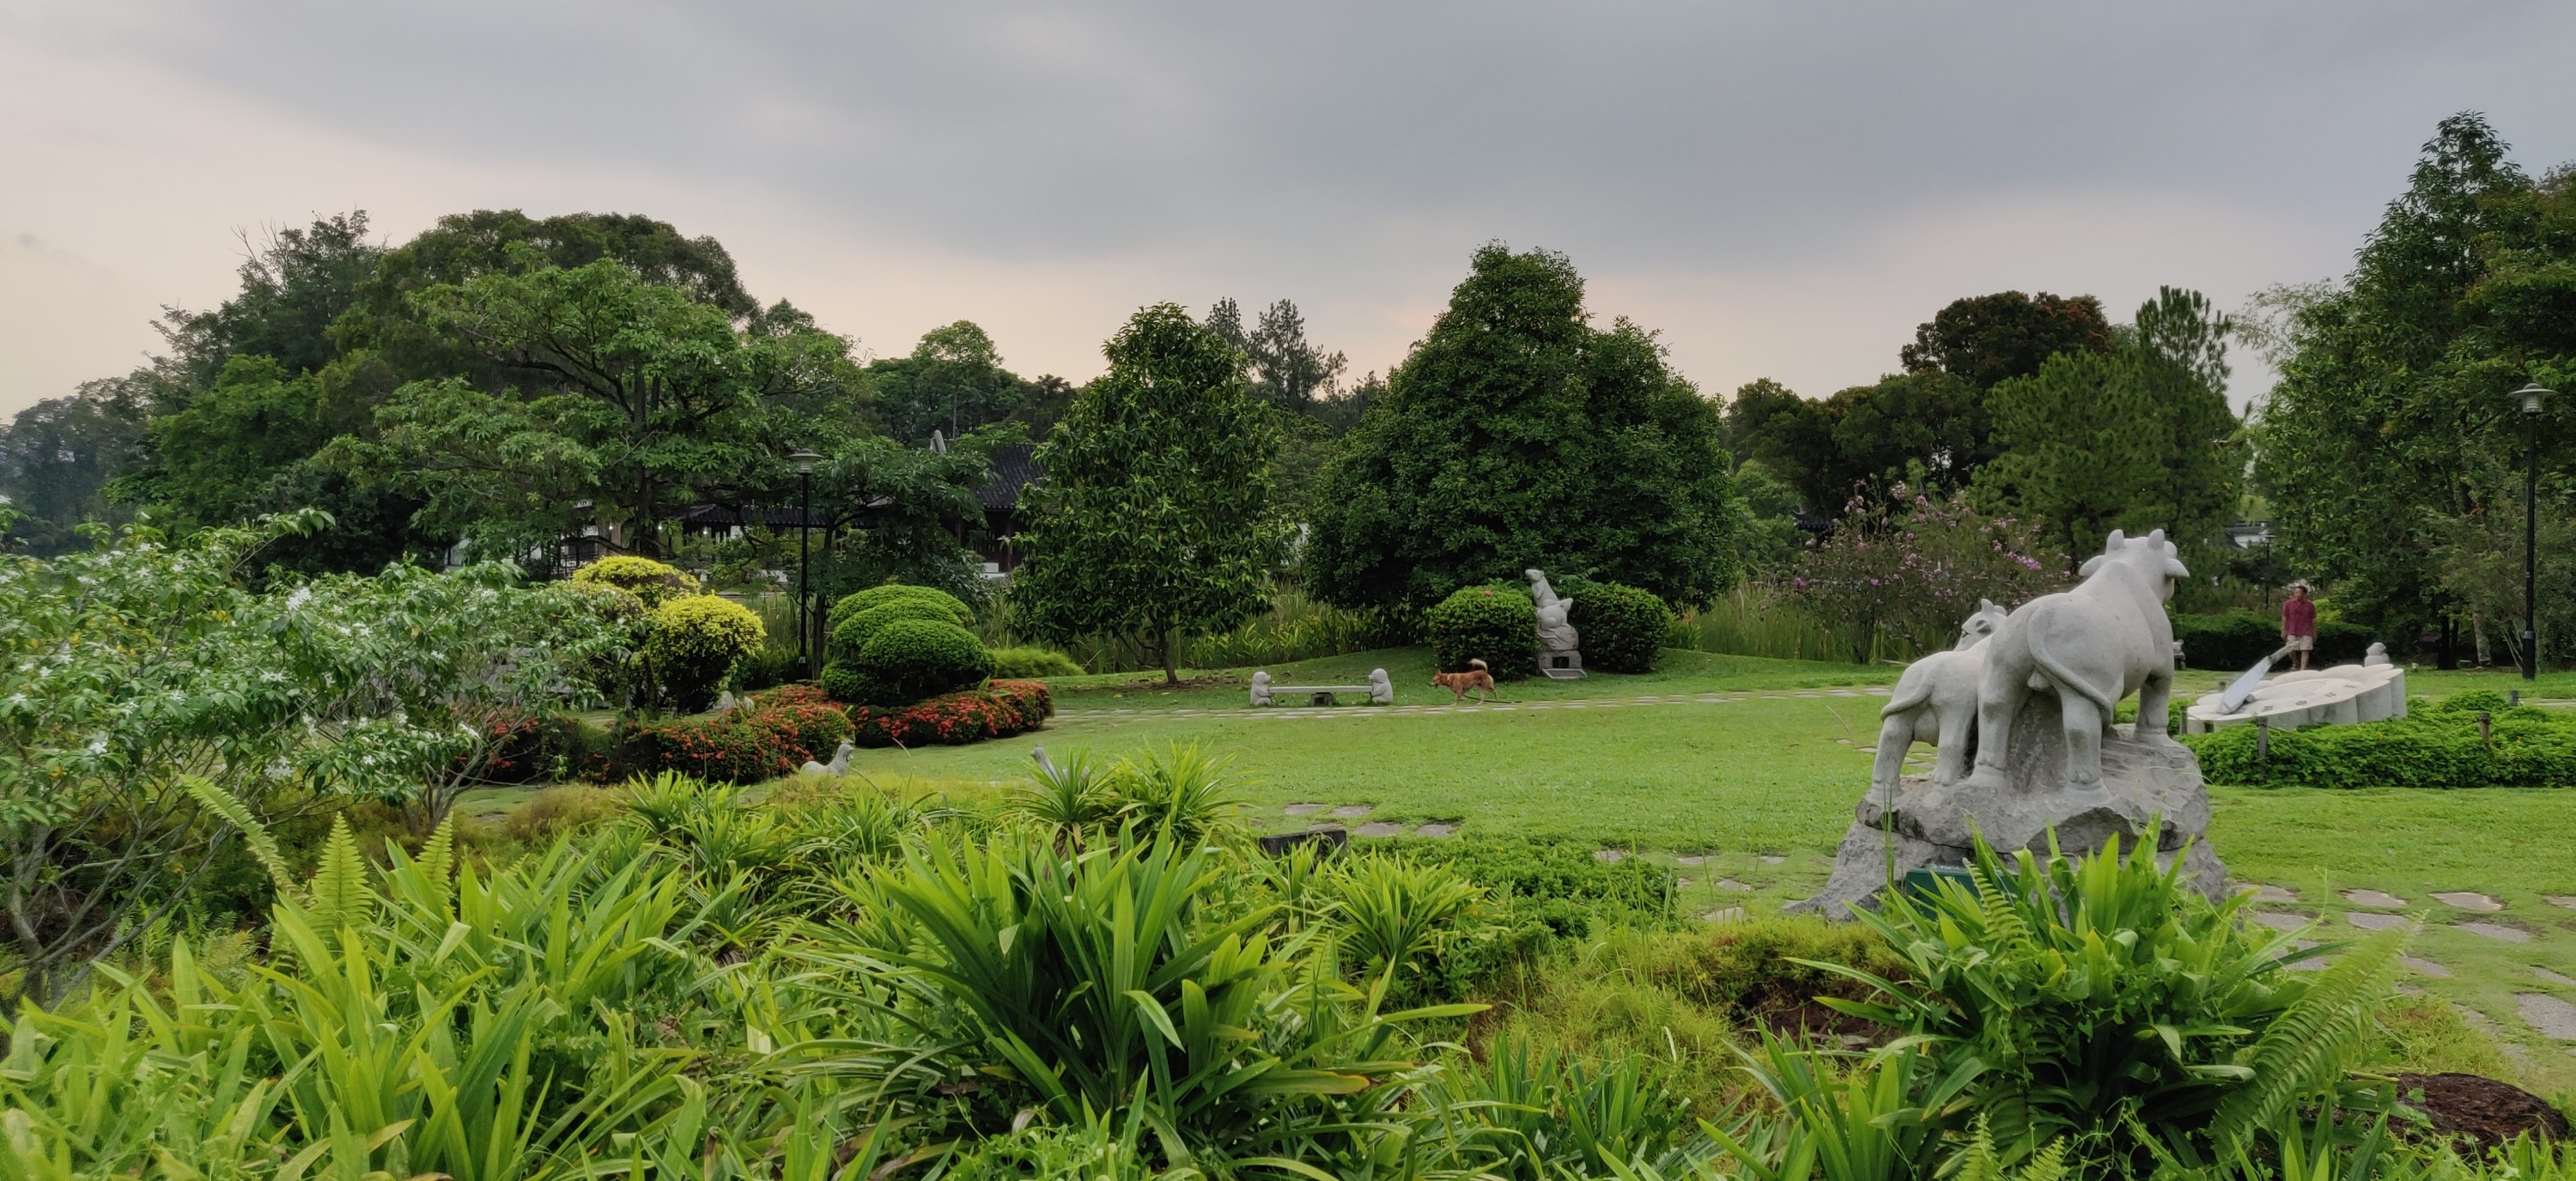 Singapore Botanical Gardens | Visions of Travel